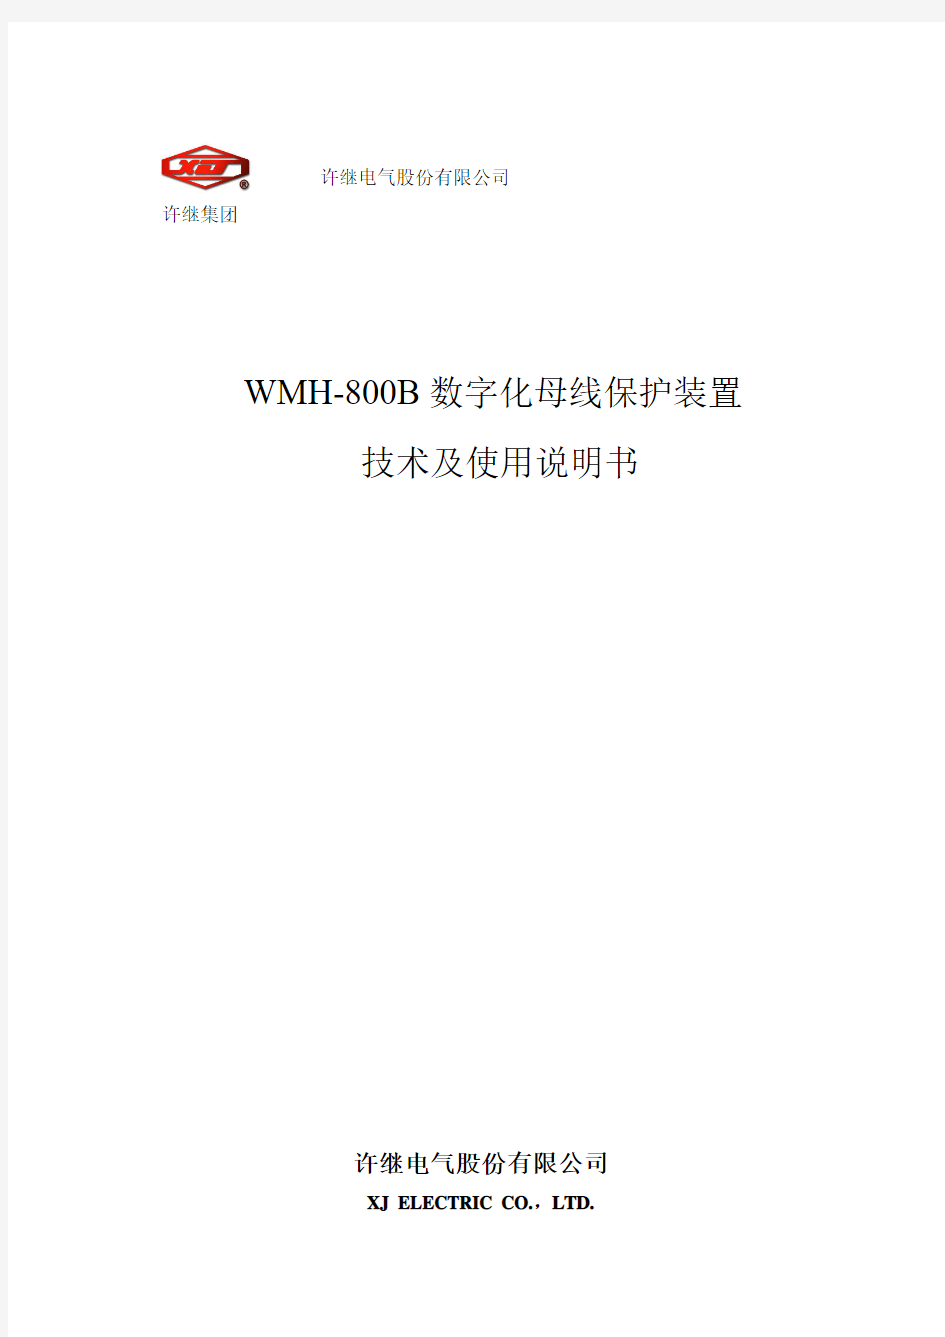 WMH-800BG5技术及使用说明书(标准版)VER 1.02 CRC E36C